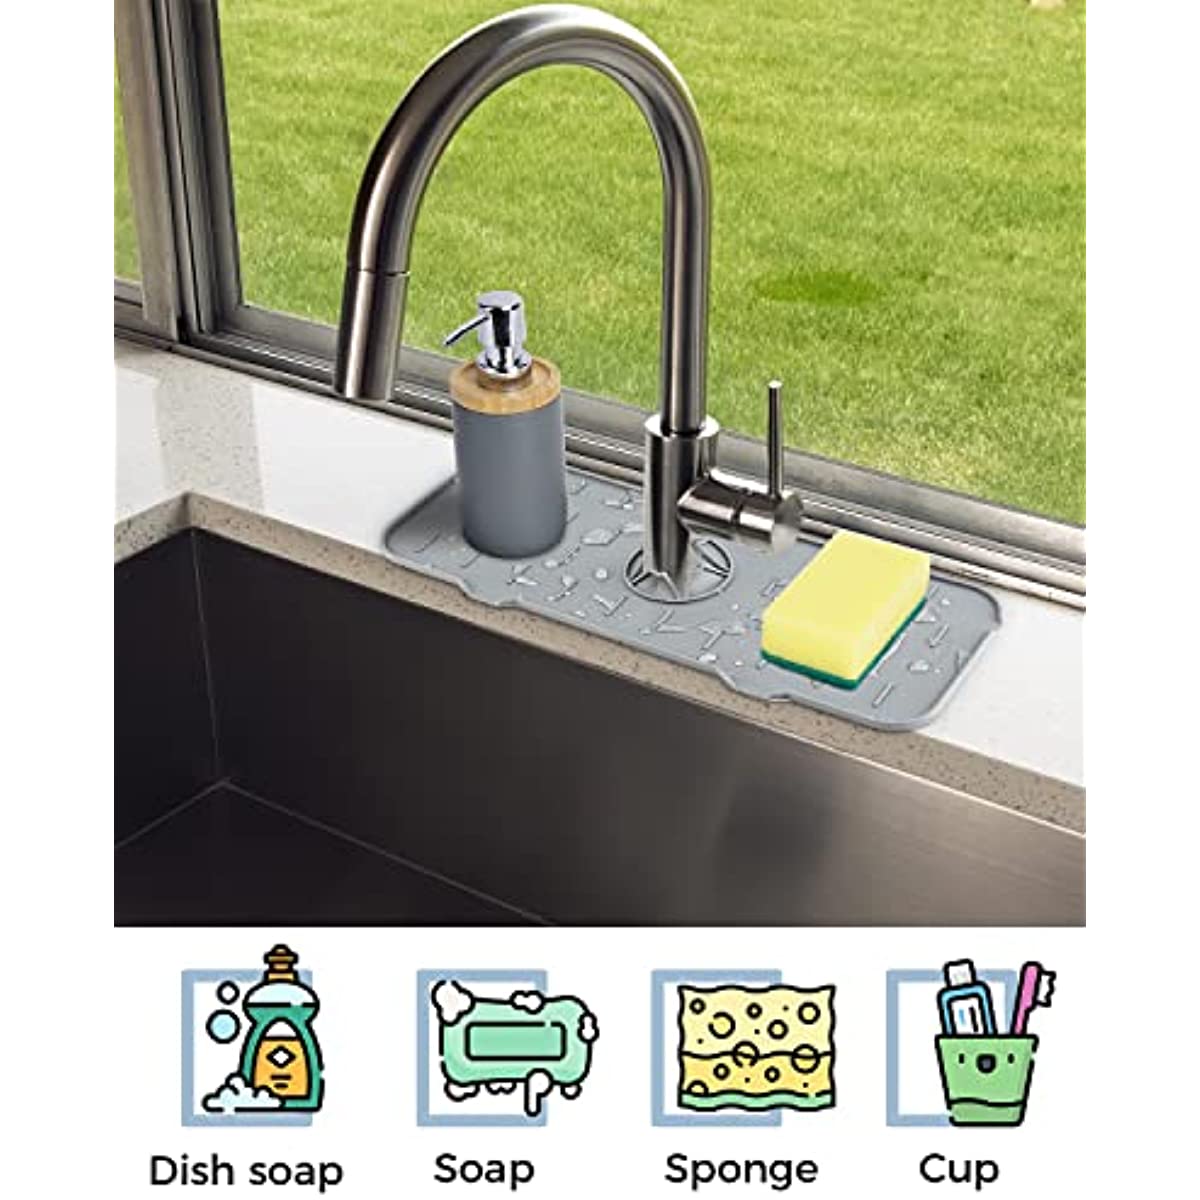 Sink Splash Guard, Kitchen Organization, Home Gadgets, Sponge Holder for Kitchen Sink, Home Organization, Kitchen Gadgets Best Sellers 2022, Sink